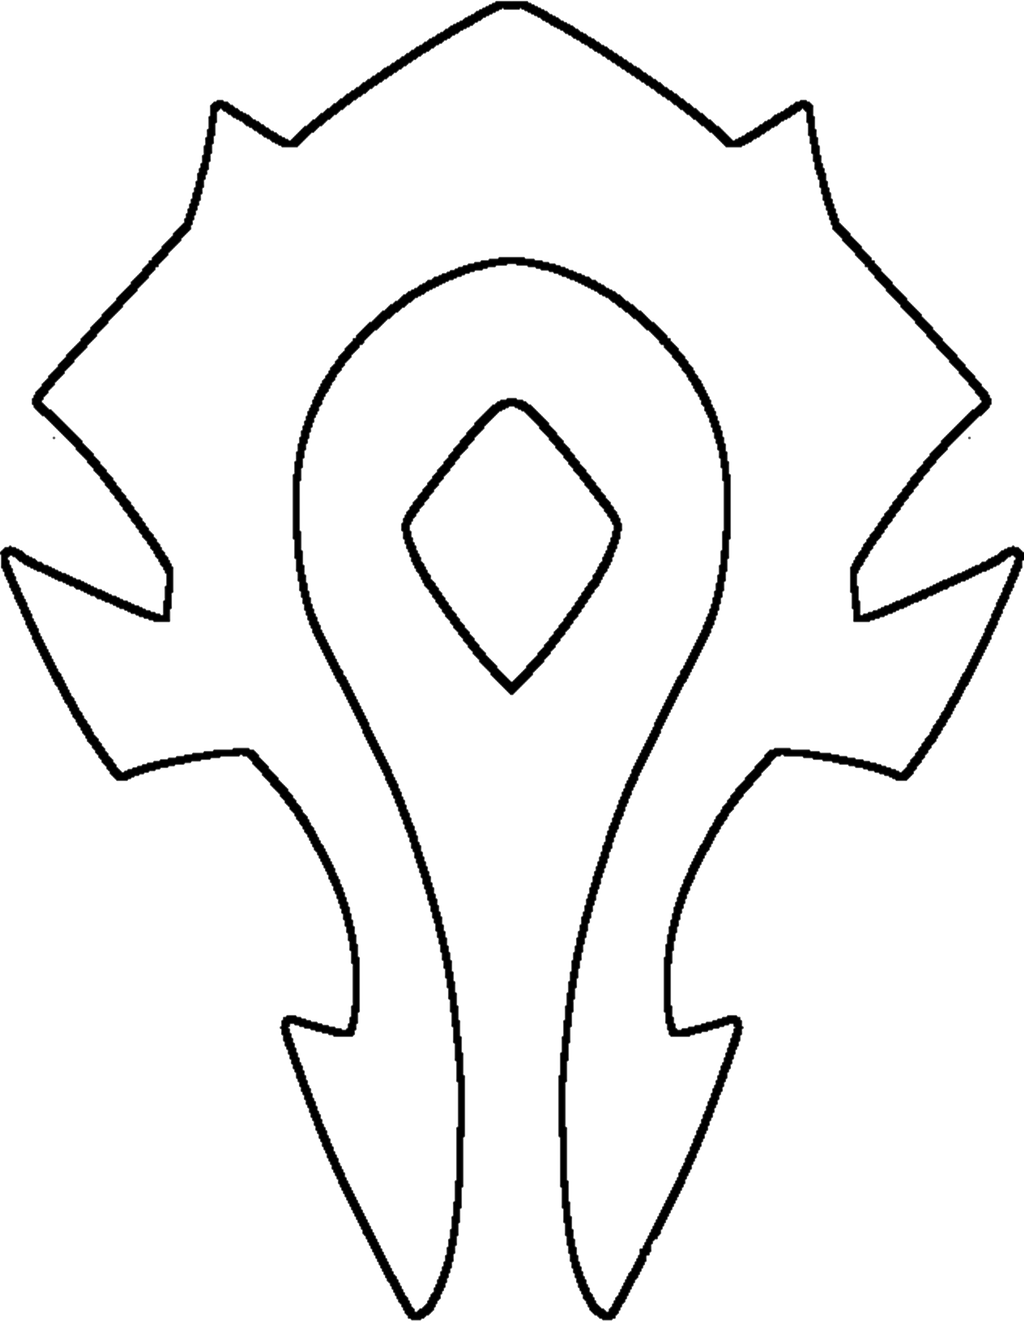 Horde symbol lineart by Skylight1989 on DeviantArt